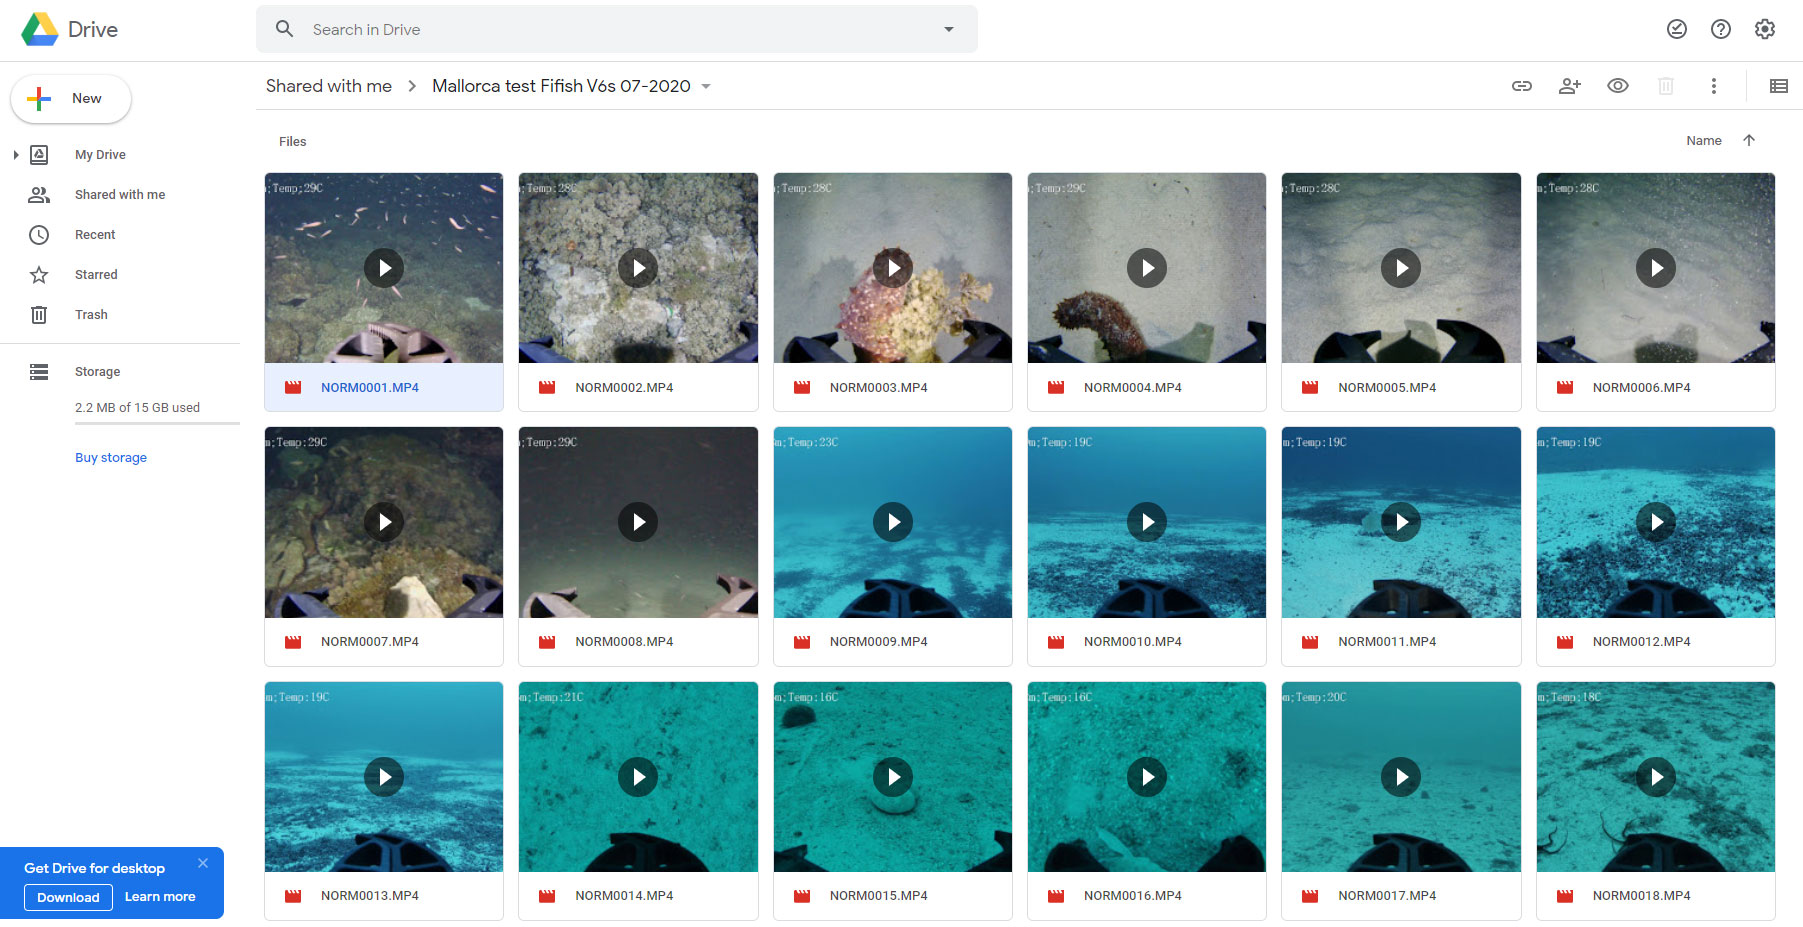 fifish-v6s-underwater-drone-videos-google-drive.jpg